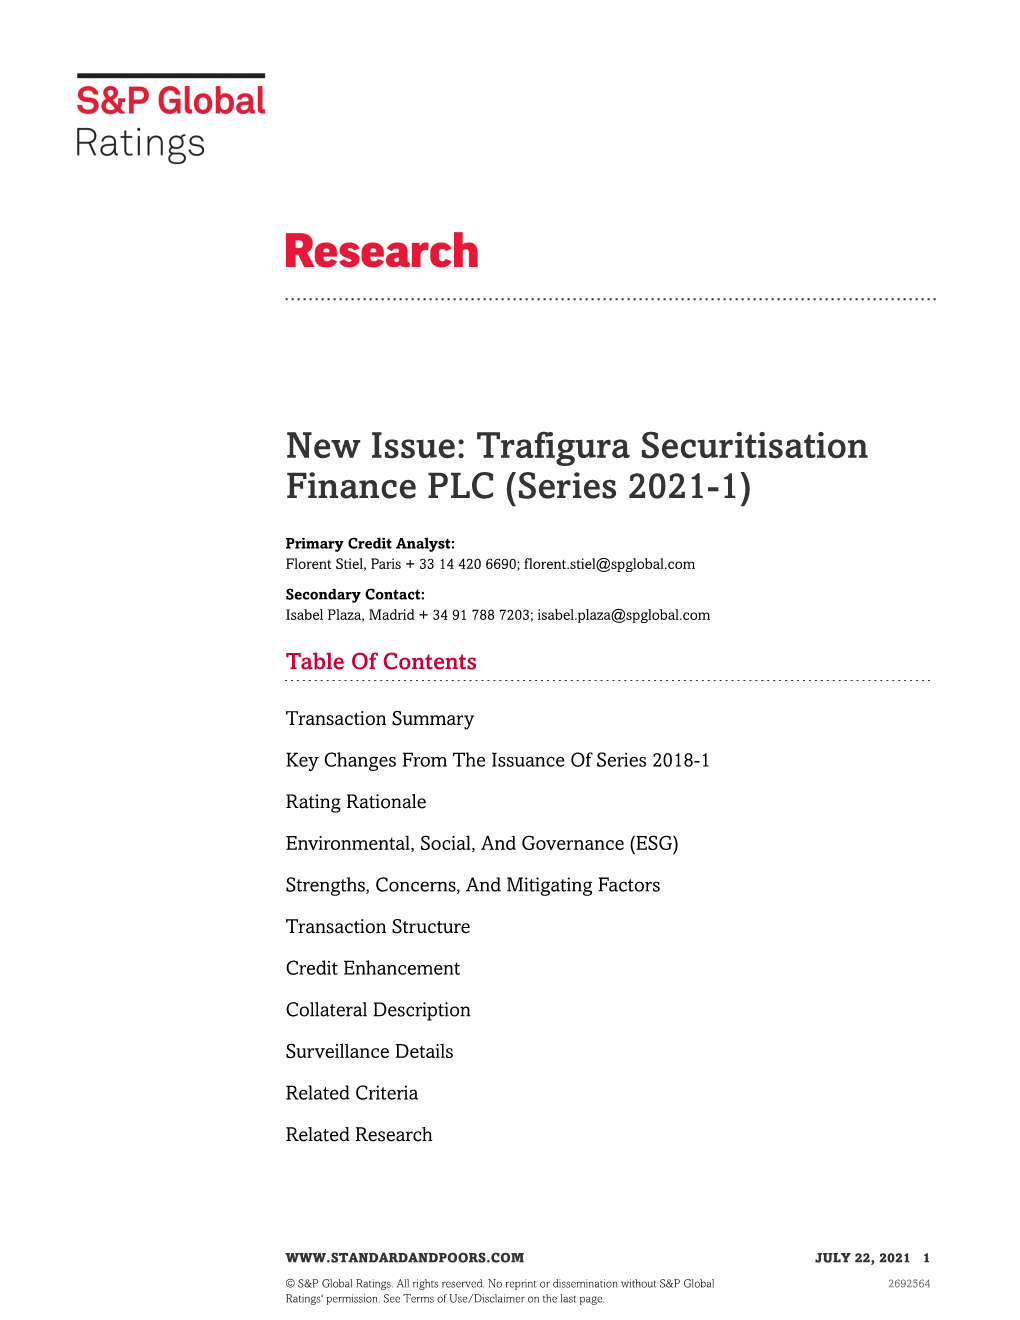 New Issue: Trafigura Securitisation Finance PLC (Series 2021-1)